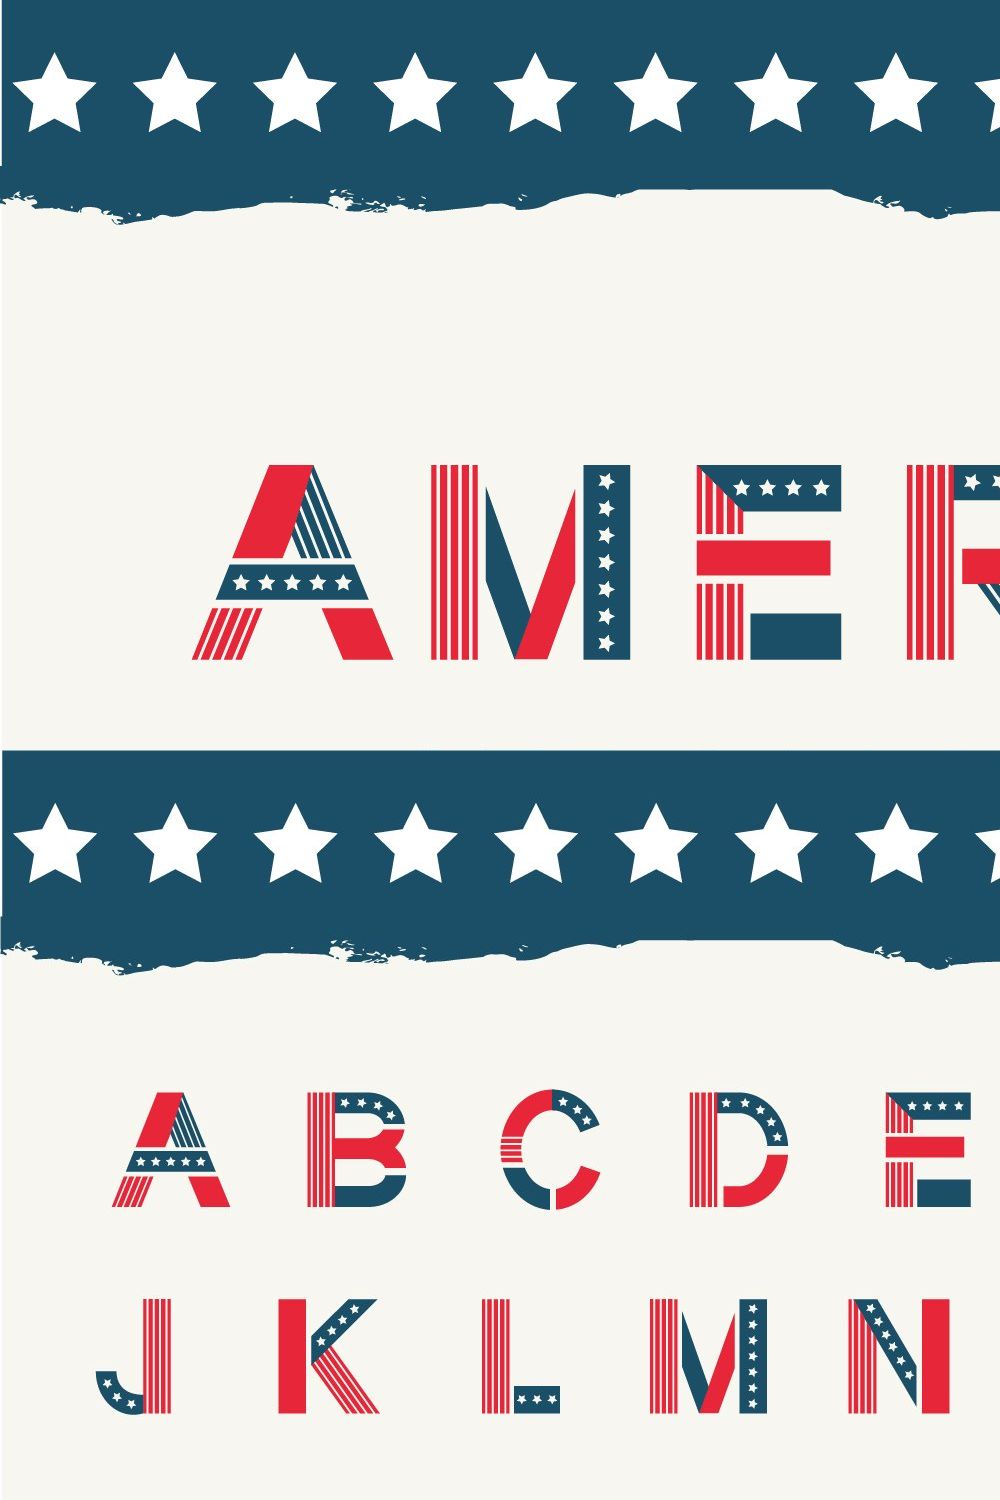 America otf color font. pinterest preview image.